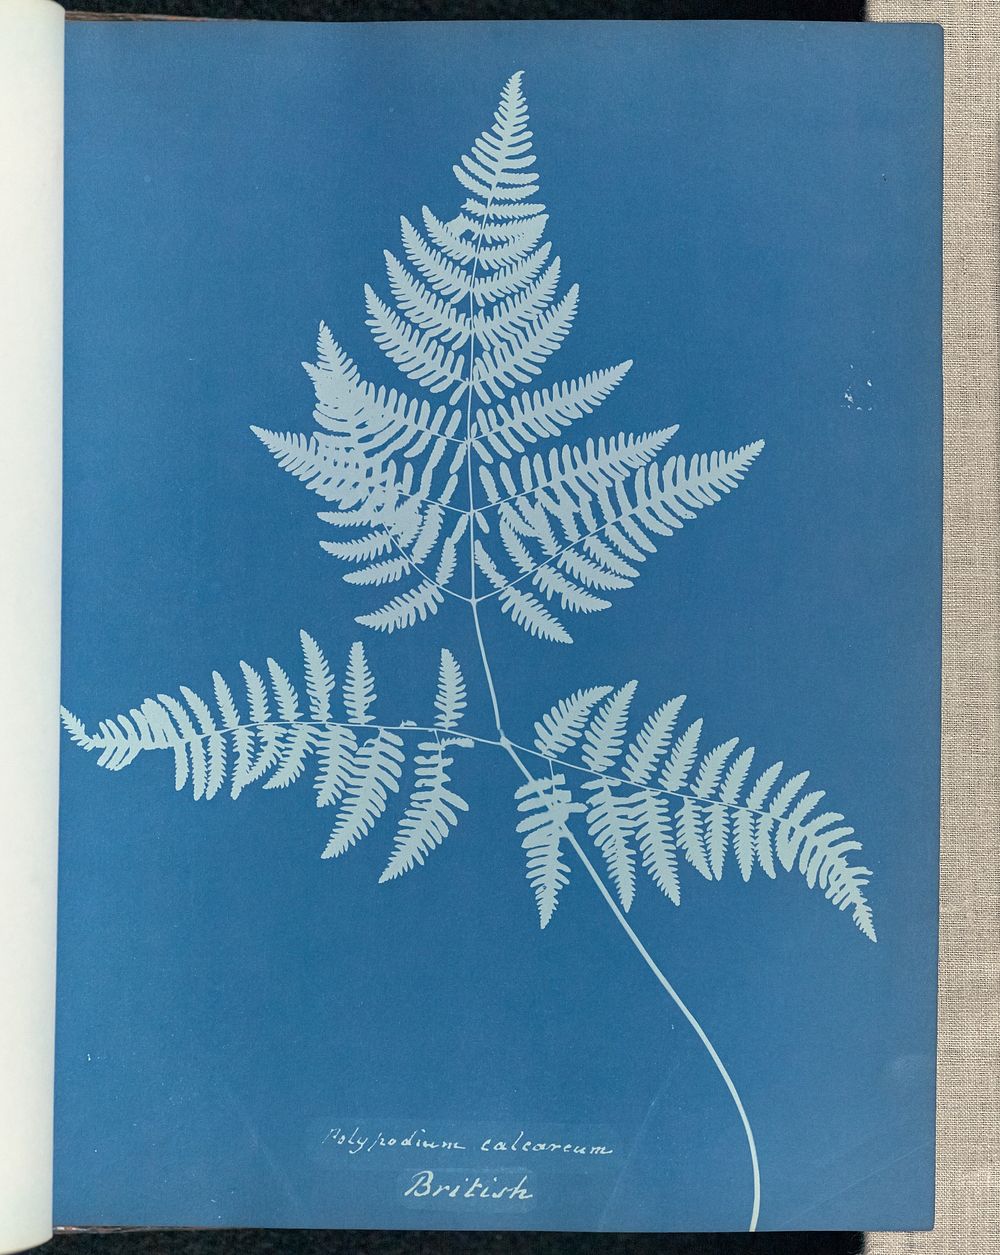 Polypodium calcareum, British by Anna Atkins and Anne Dixon